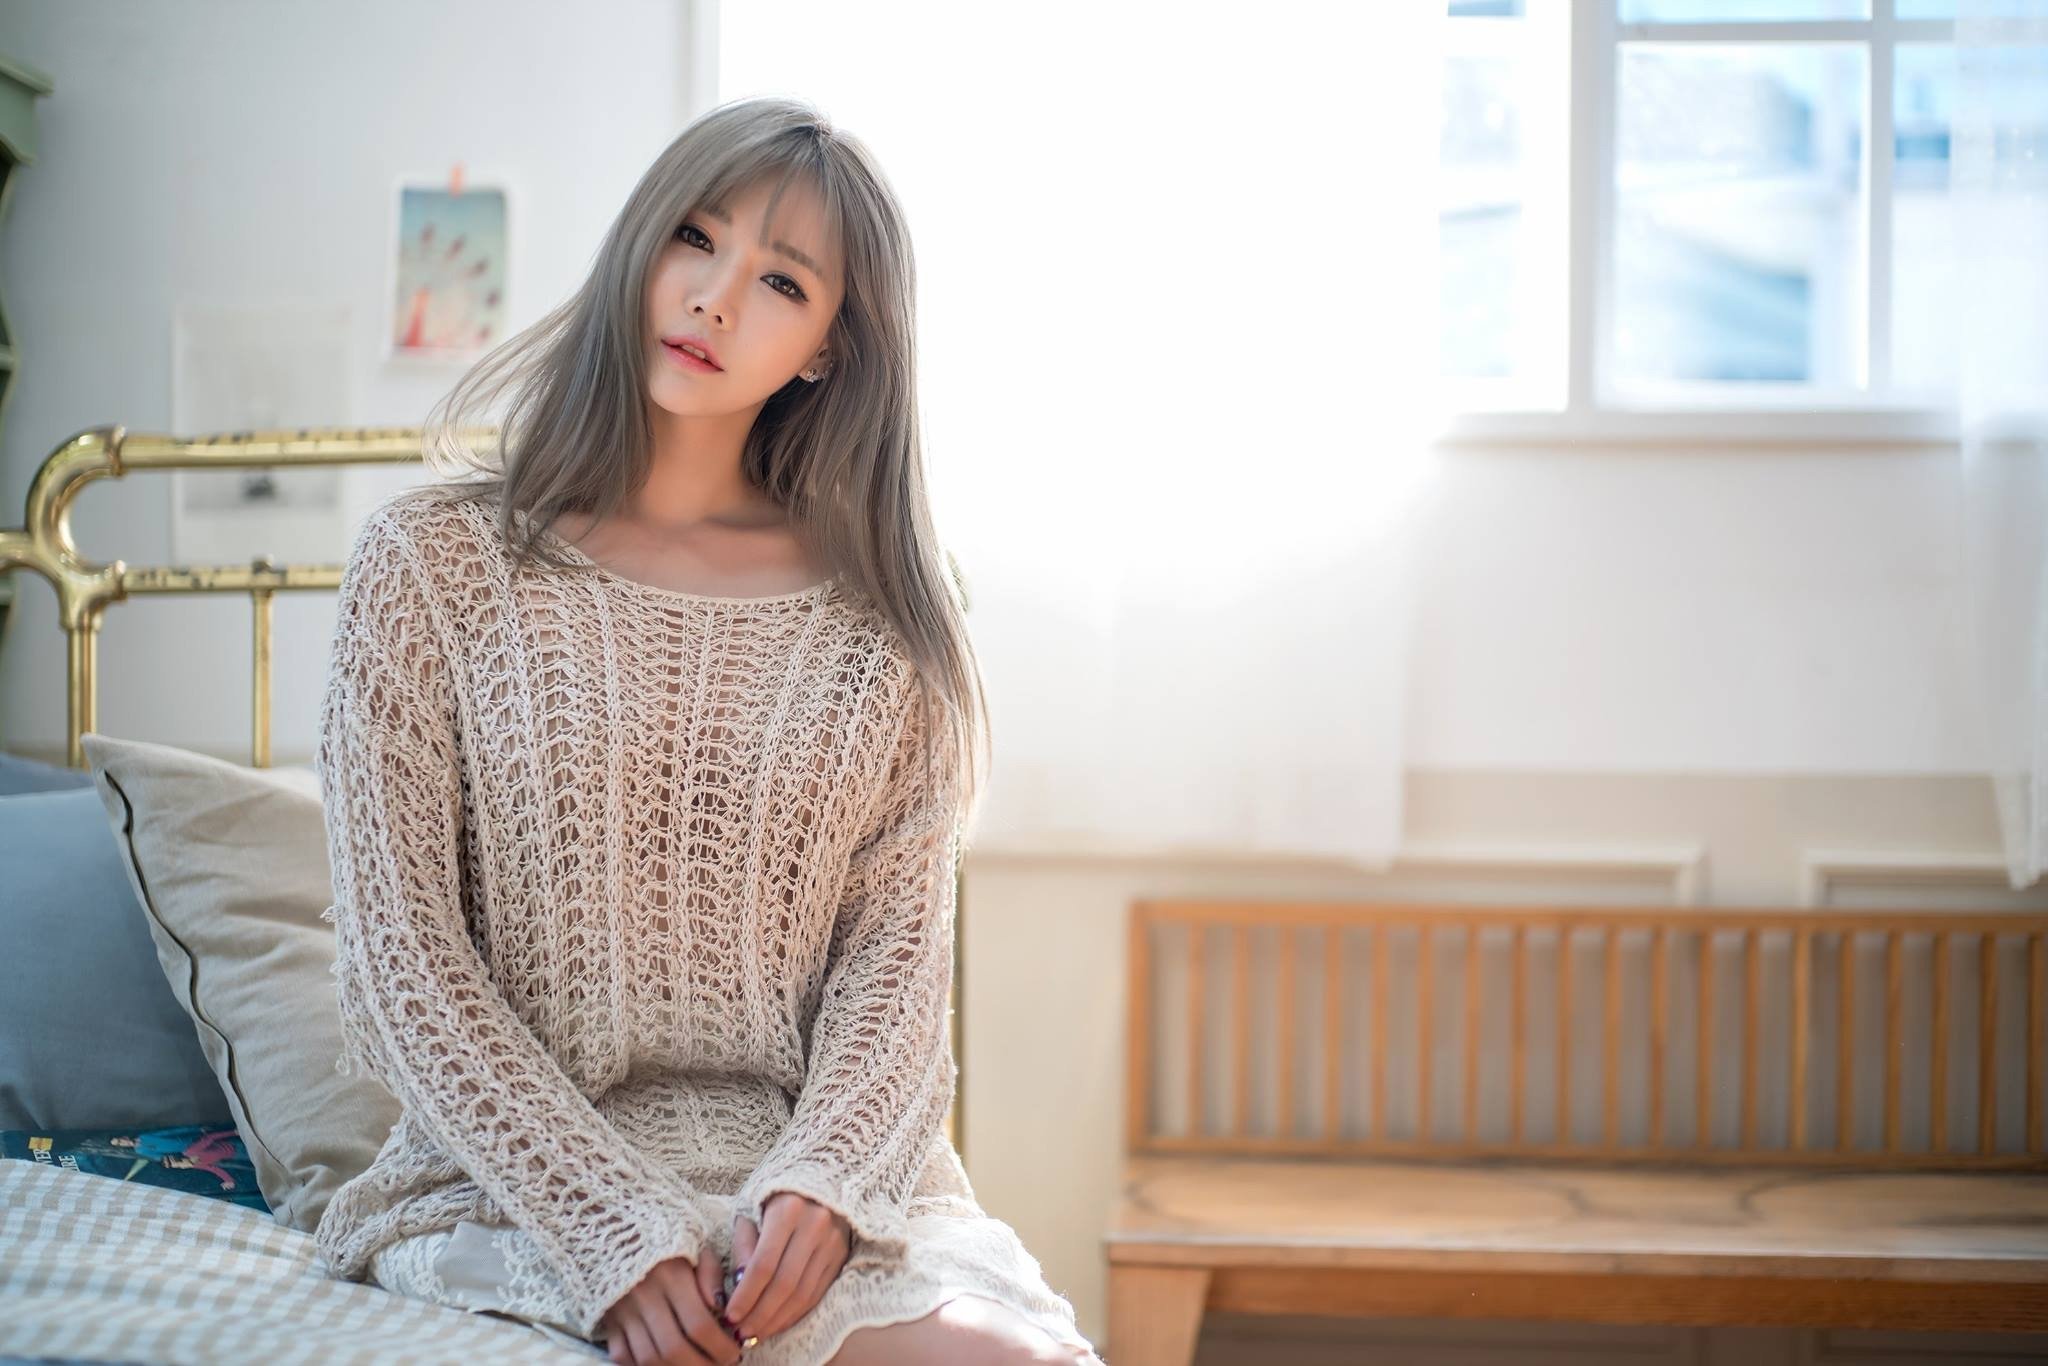 Korean long hair girl with photo